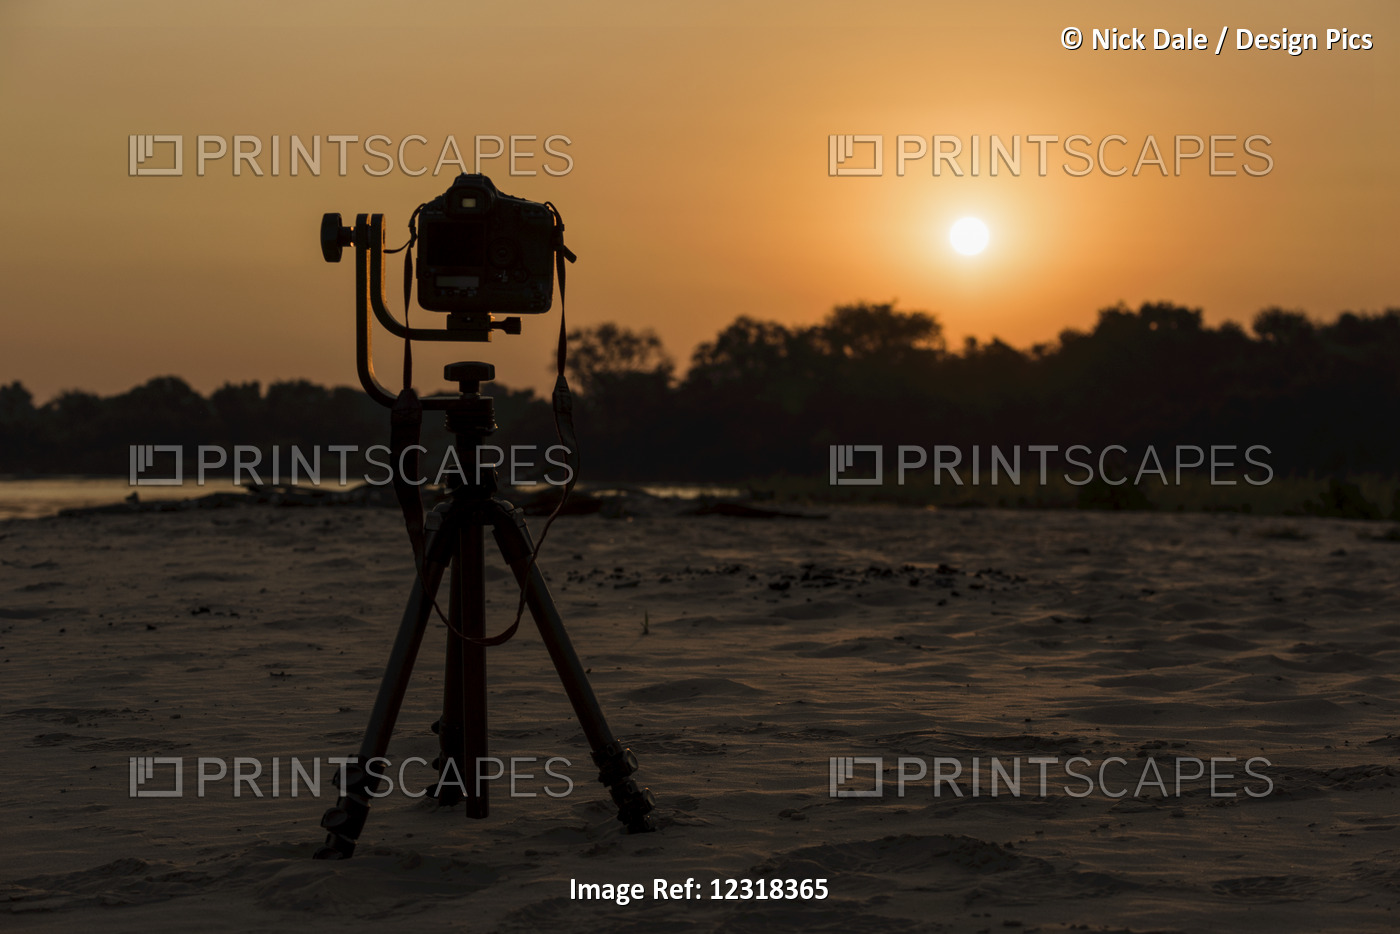 Camera On Tripod Beside River At Sunset; Mato Grosso Do Sul, Brazil